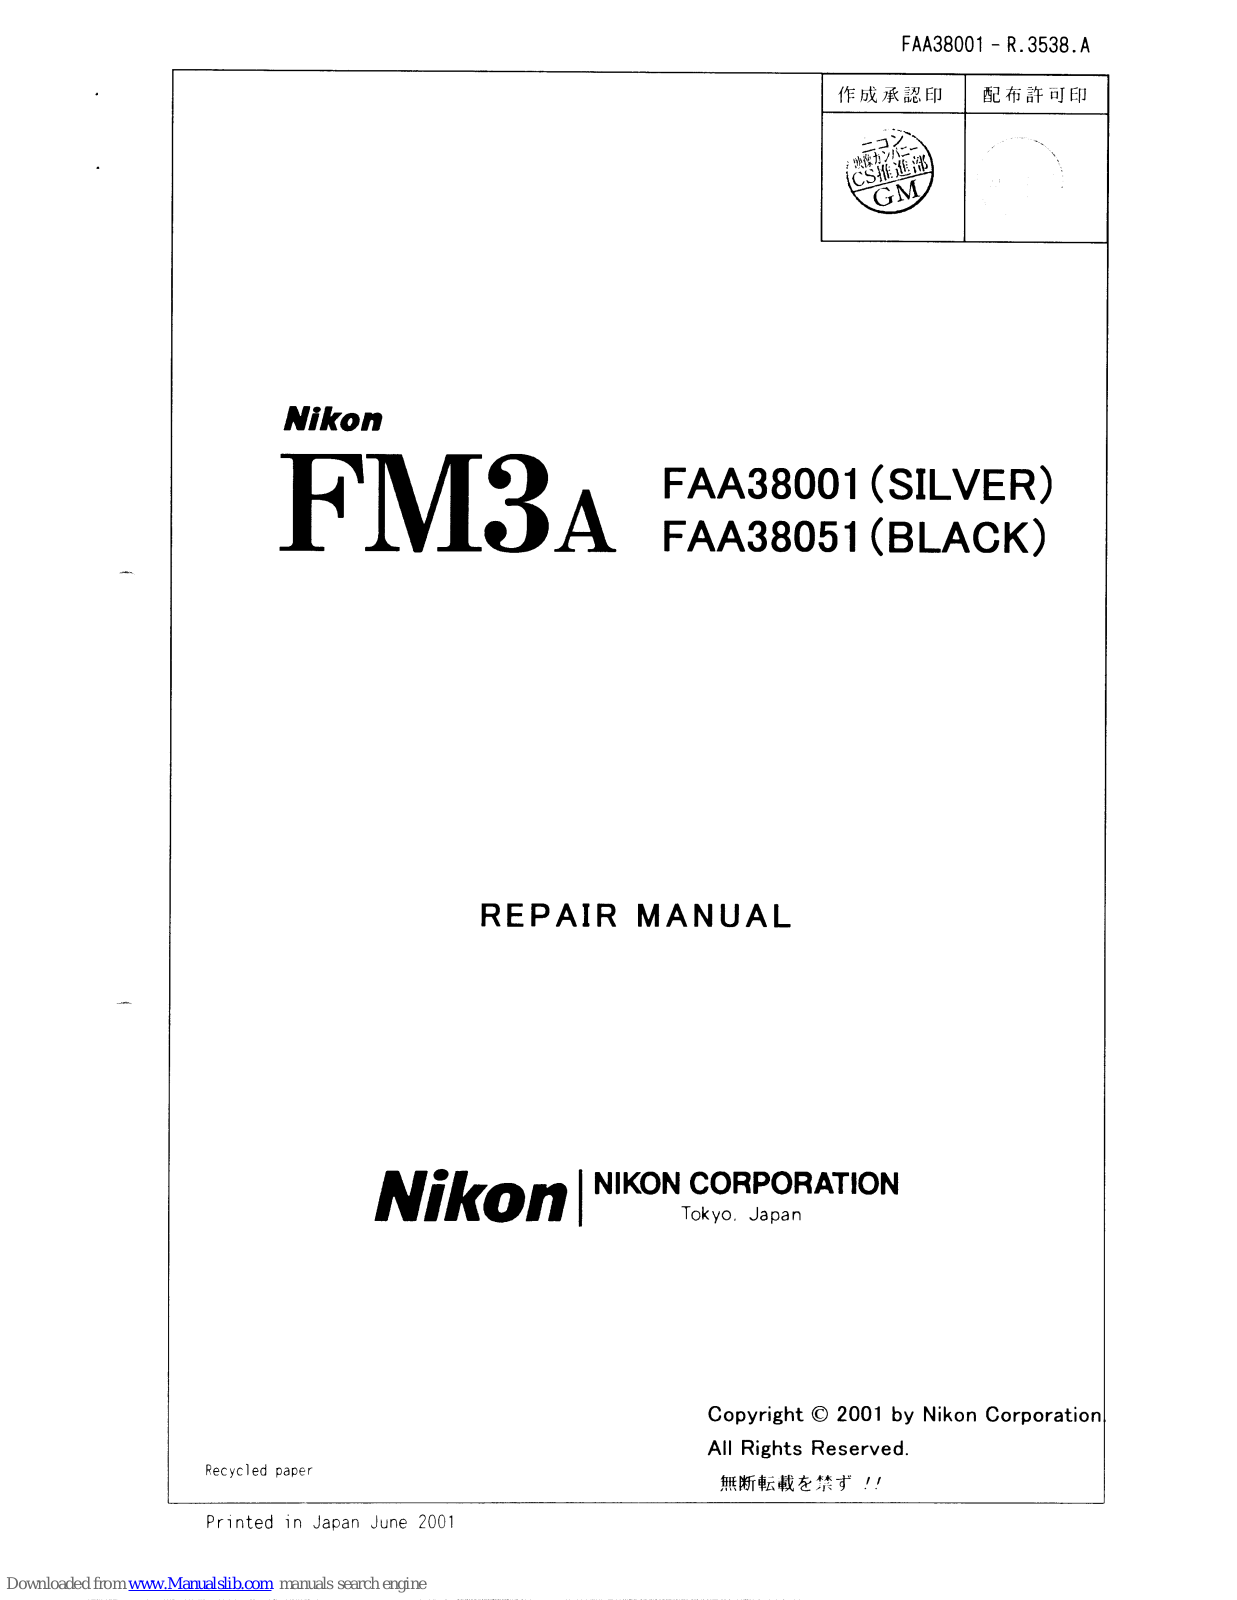 Nikon FM3a Repair Manual